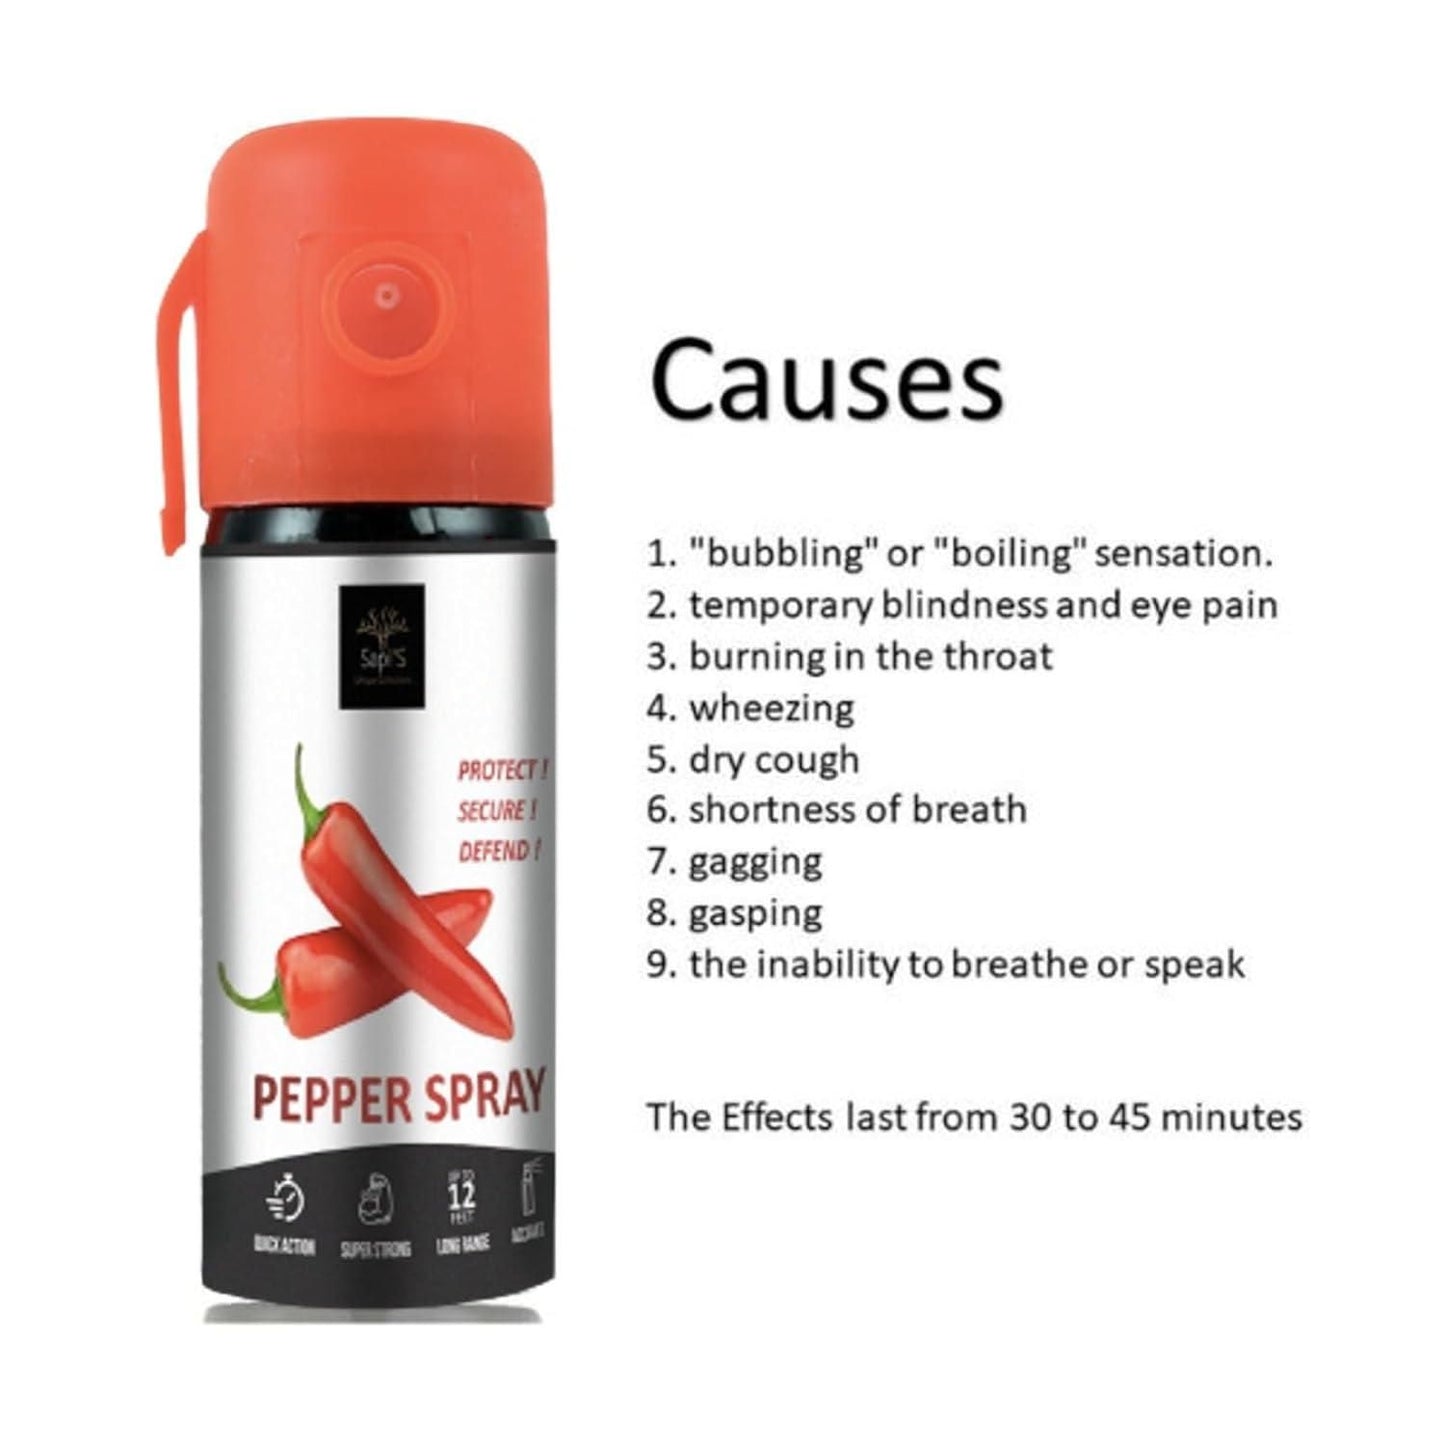 Impower Self Defense Pepper Spray�